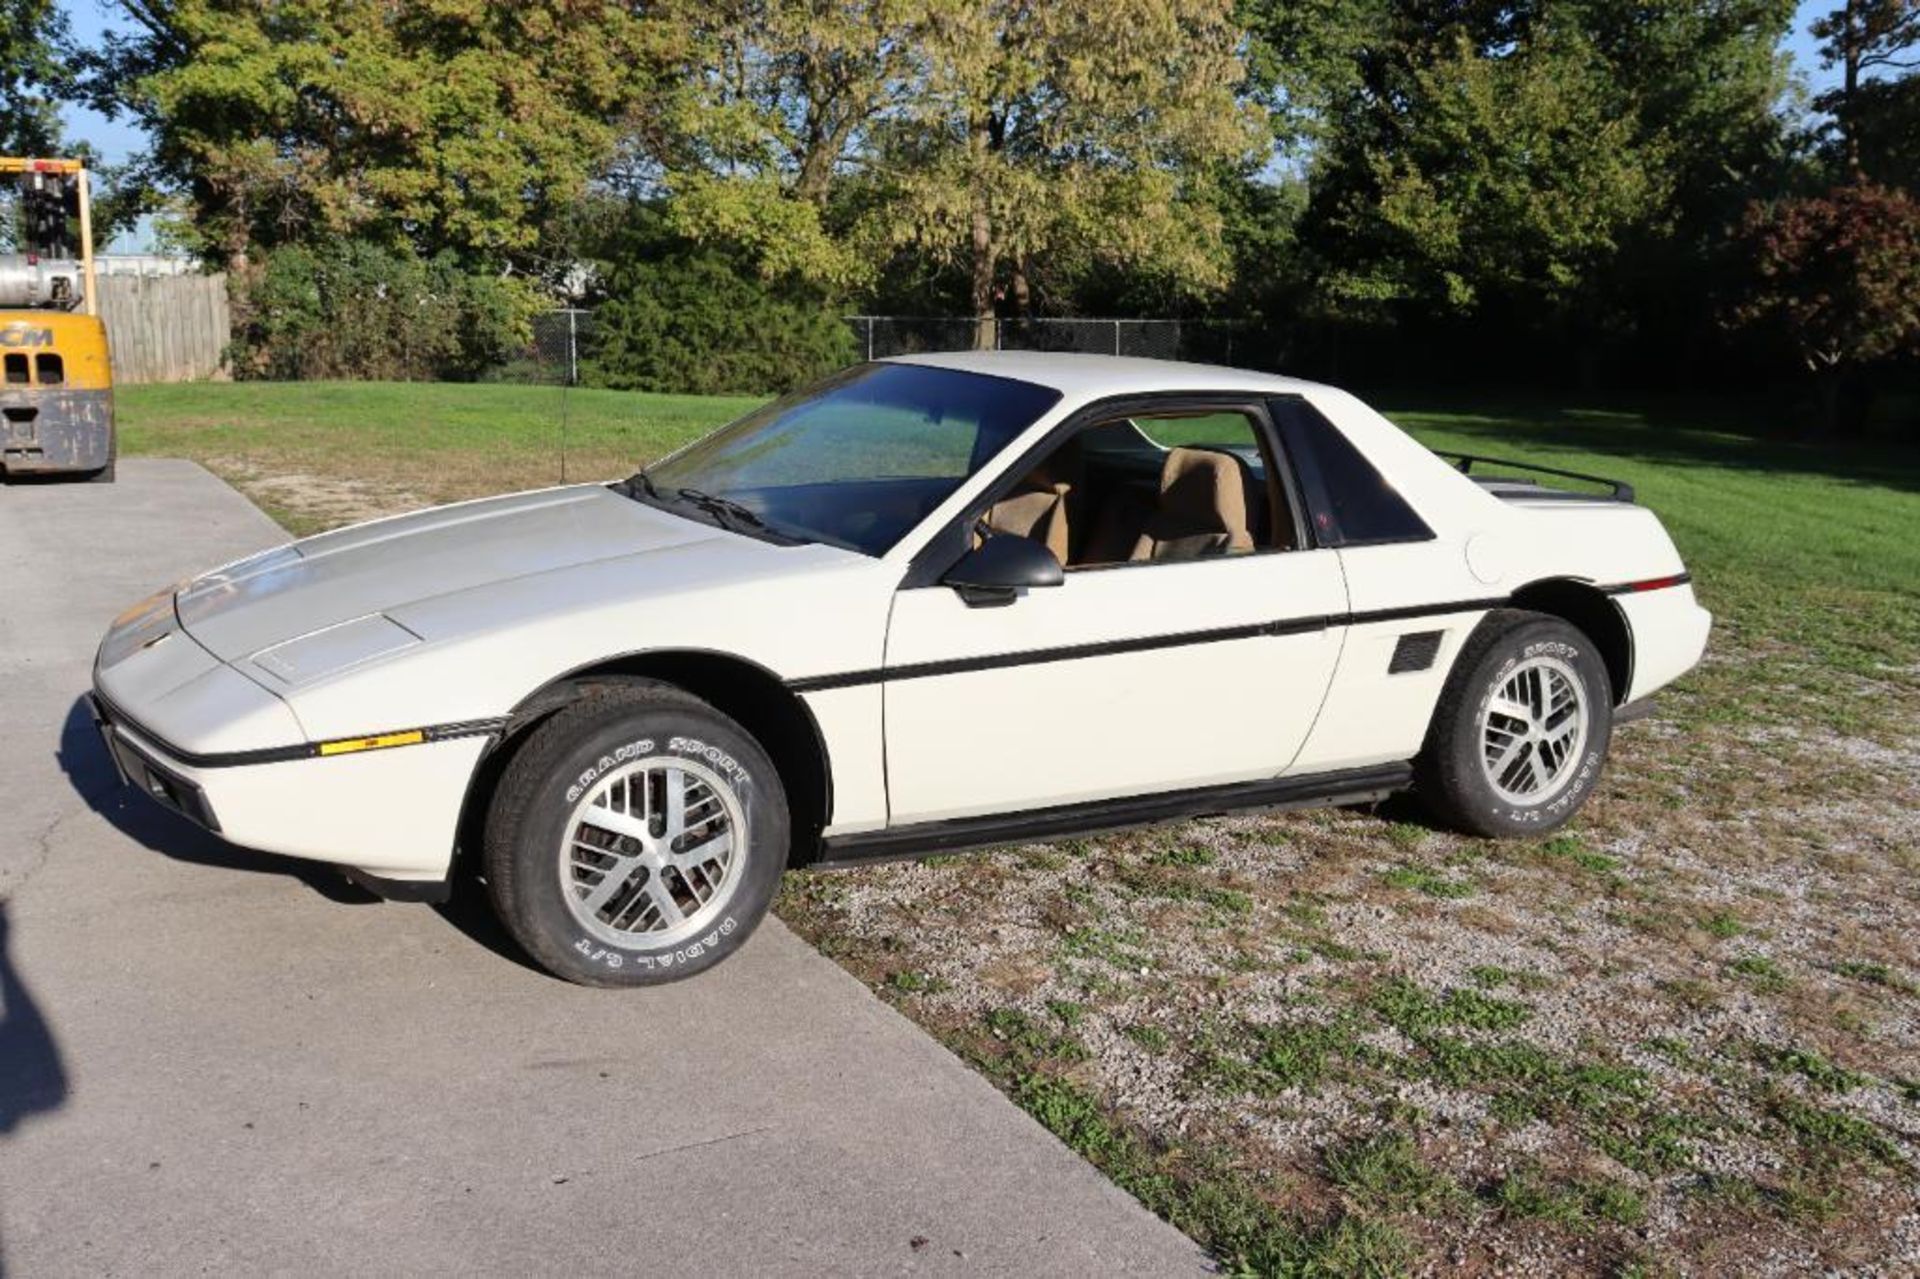 1985 Pontiac Fiero - Image 2 of 63